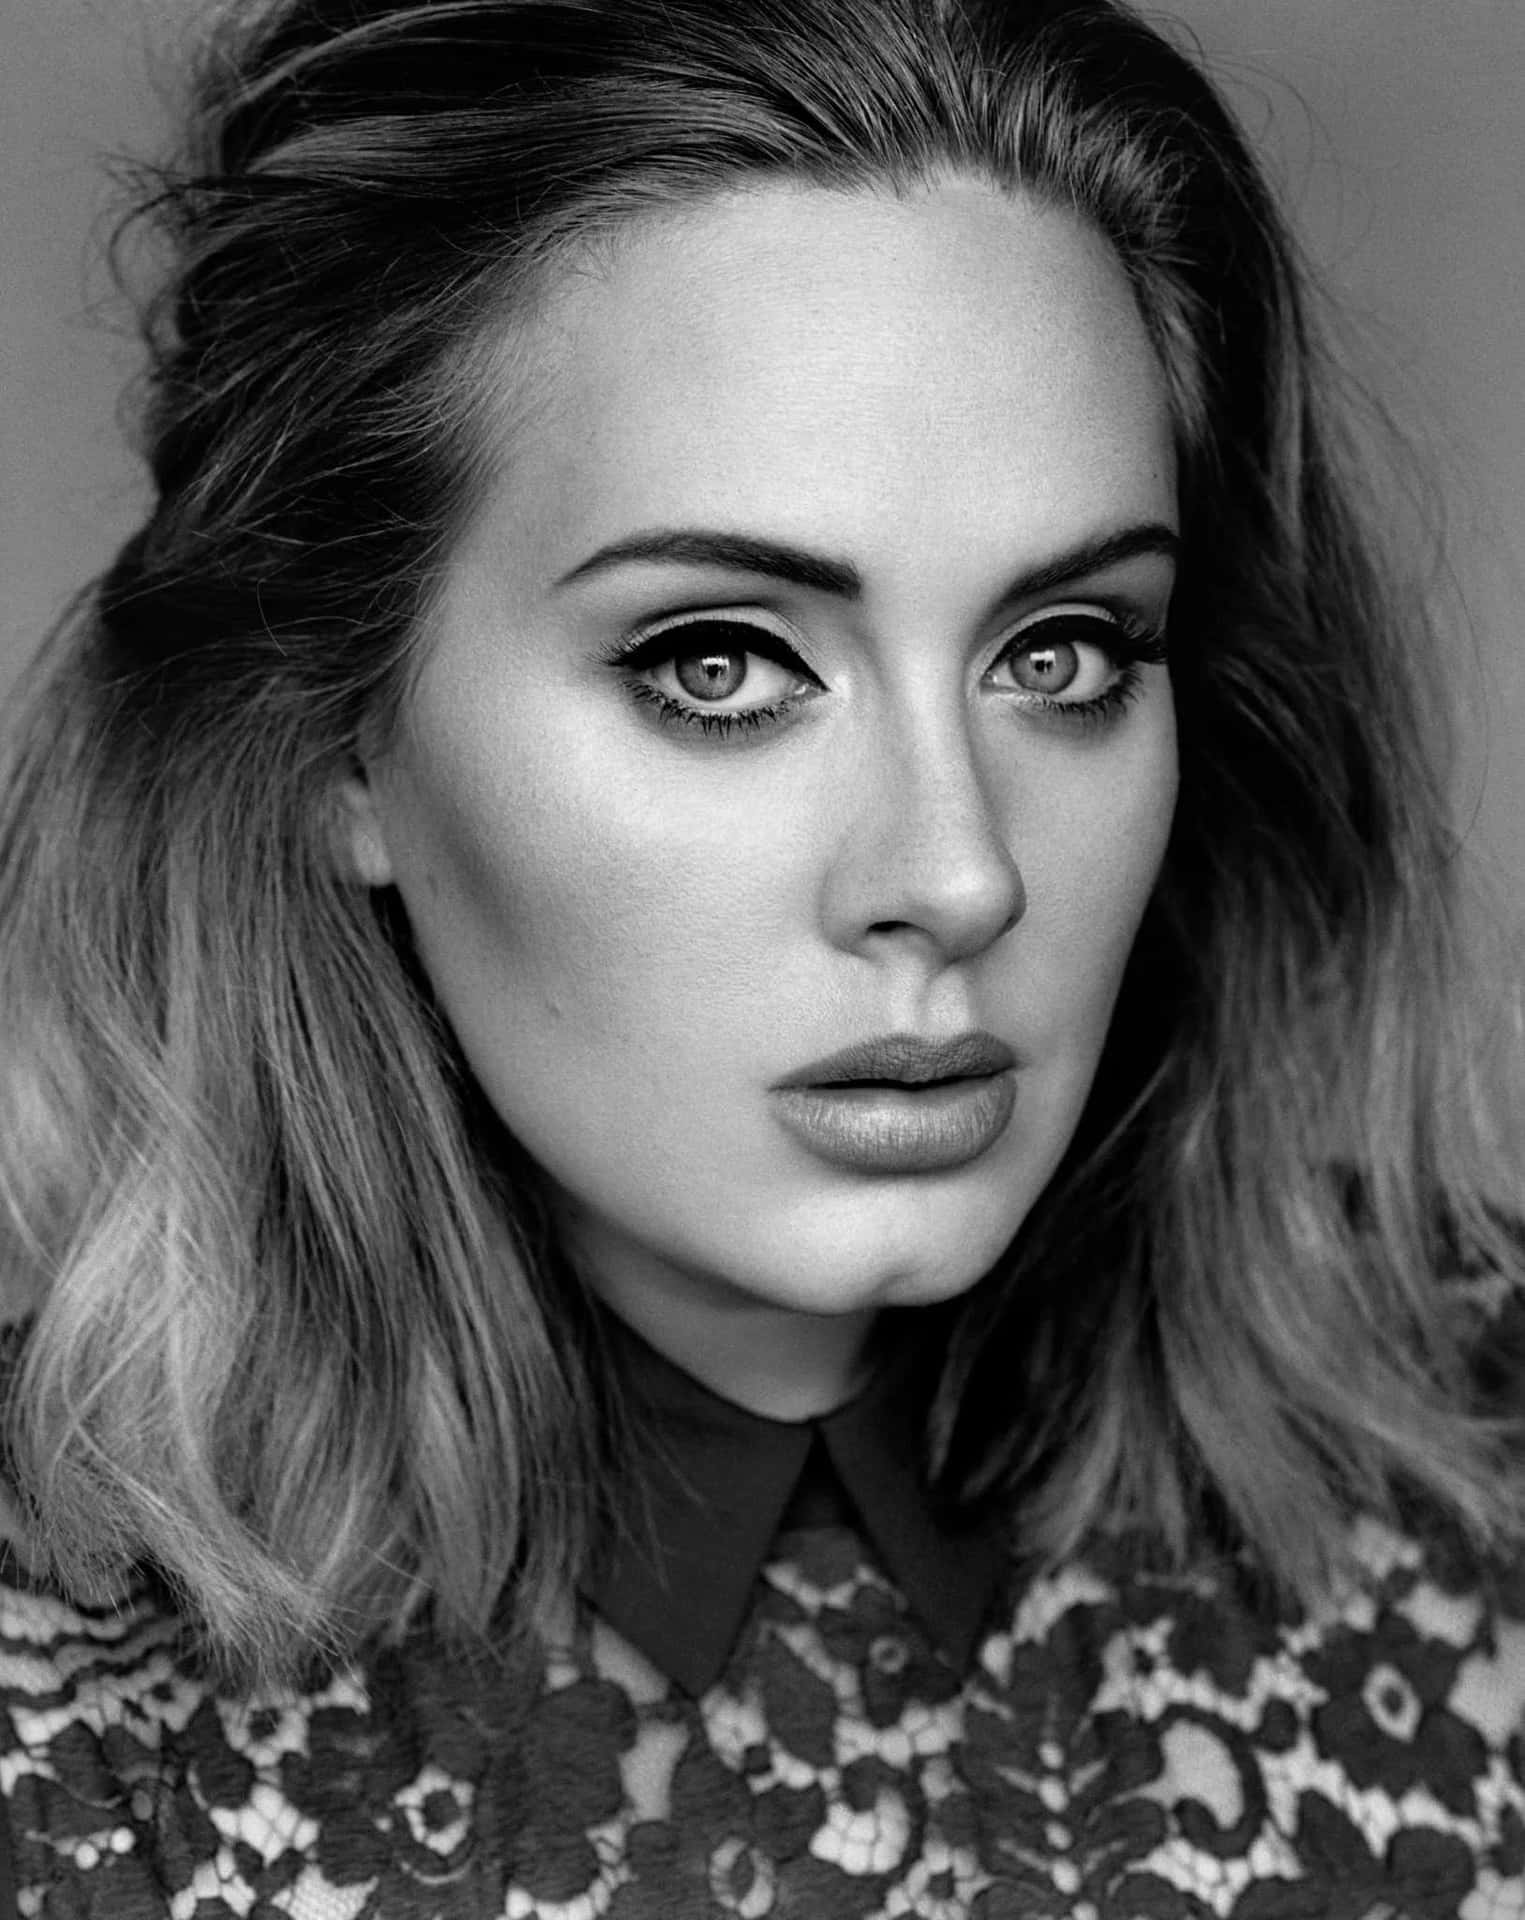 Ilnuovo Album Di Adele 